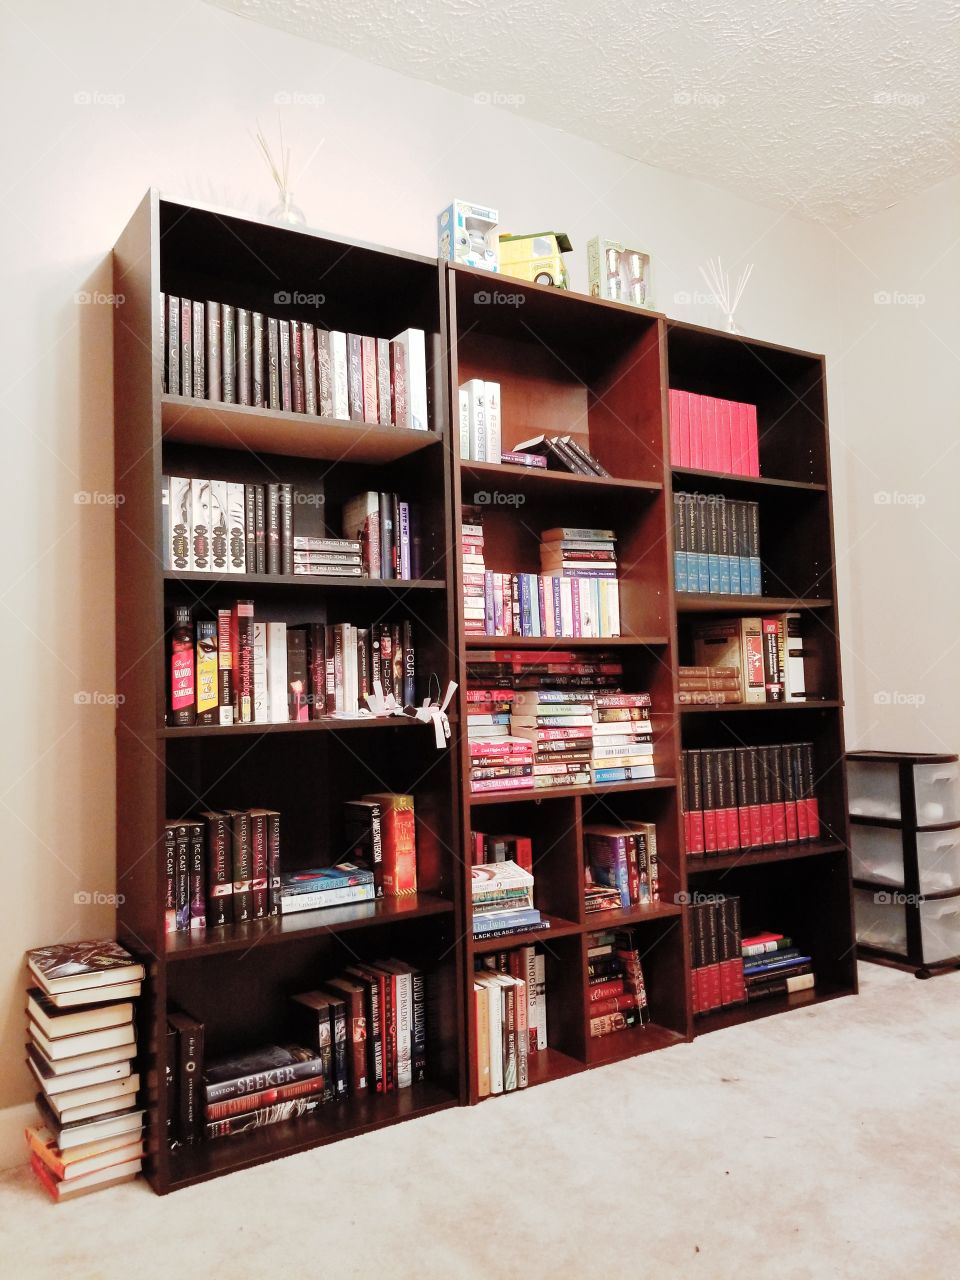 Bookshelves.  My addiction!